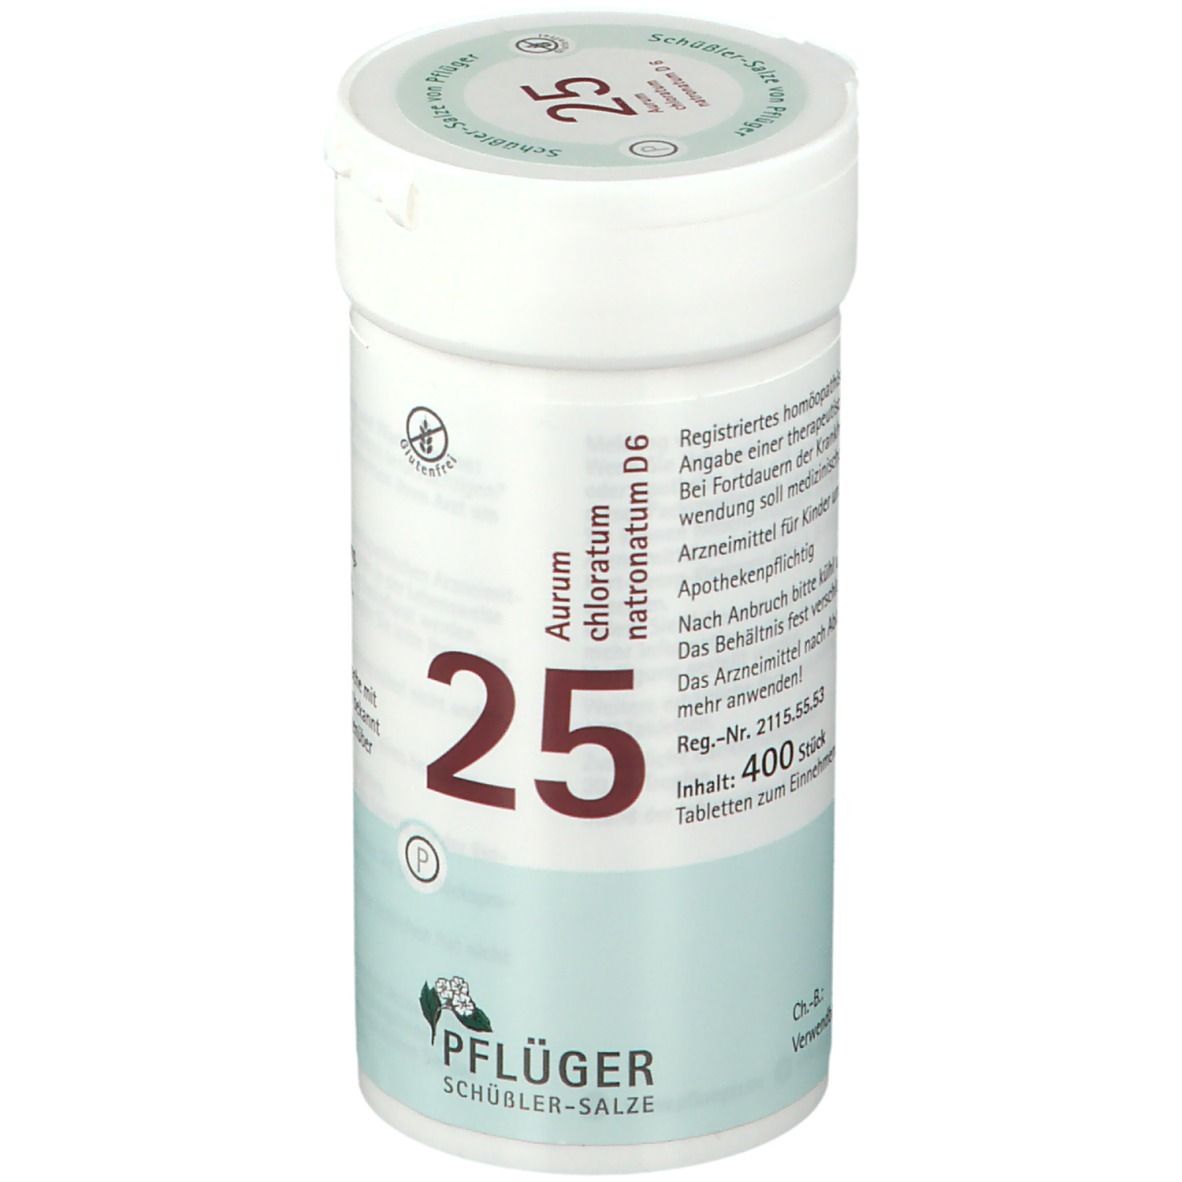 Biochemie Pflüger® Nr. 25 Aurum chloratum natronatum D6 Tabletten